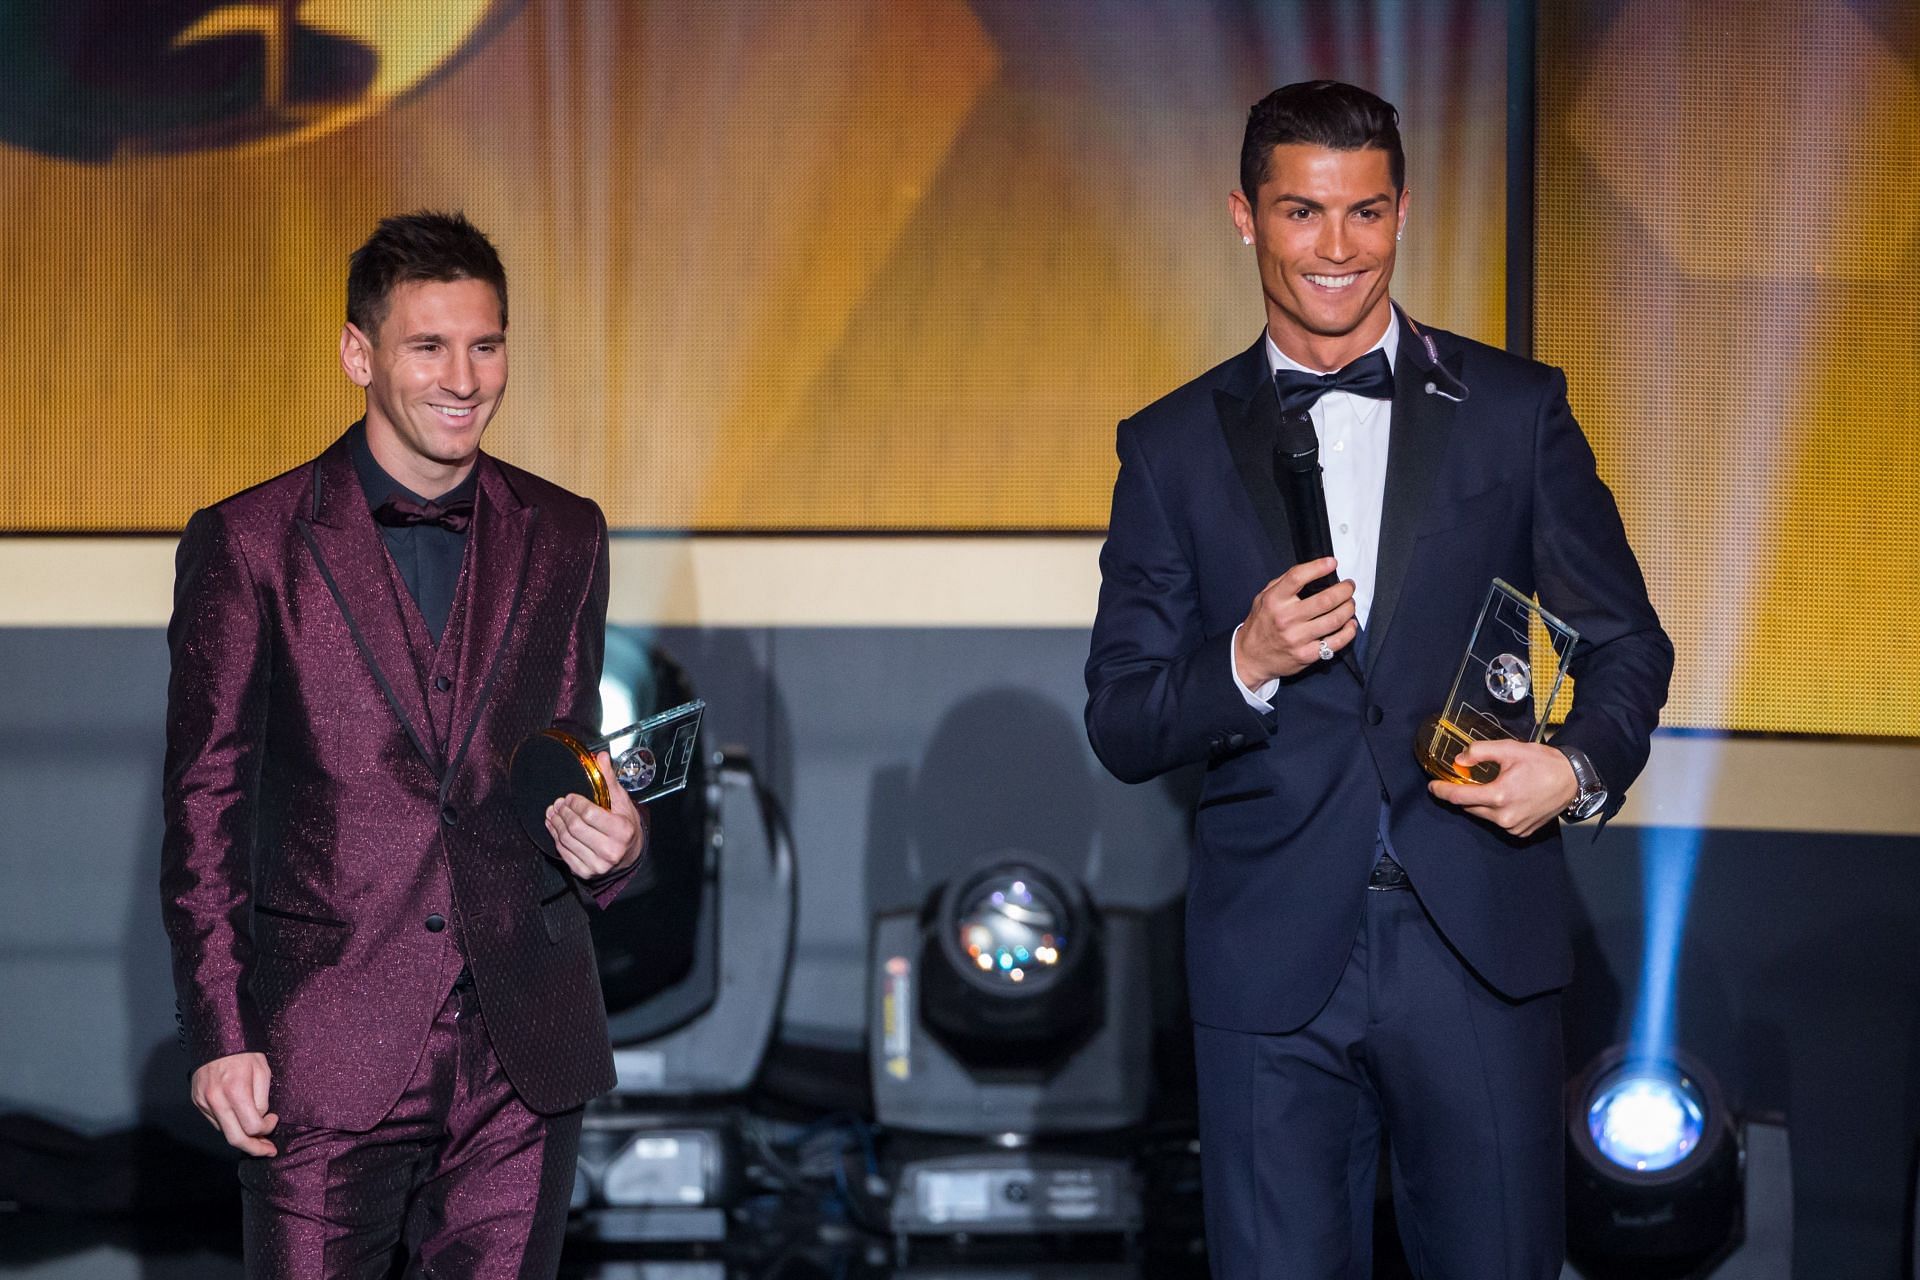 Cristiano Ronaldo and Lionel Messi have dominated the sport in the last decade